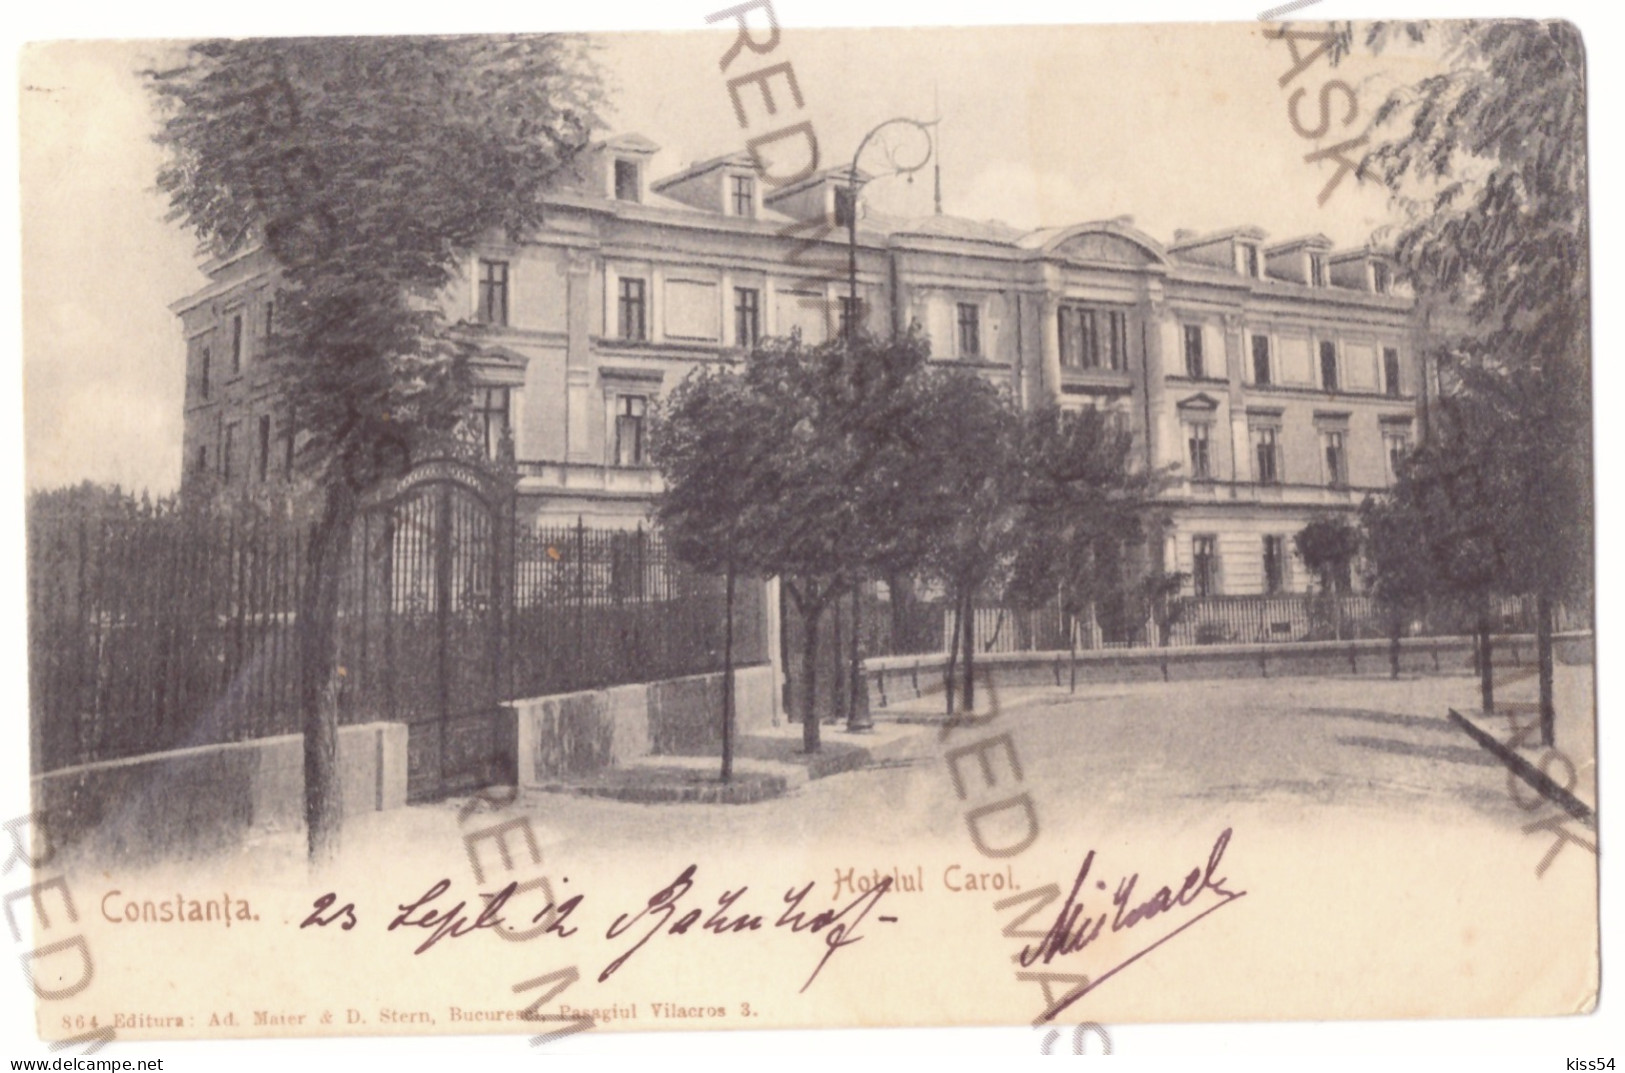 RO 81 - 18383 CONSTANTA, Hotel Carol, Romania - Old Postcard - Used - 1912 - Roumanie